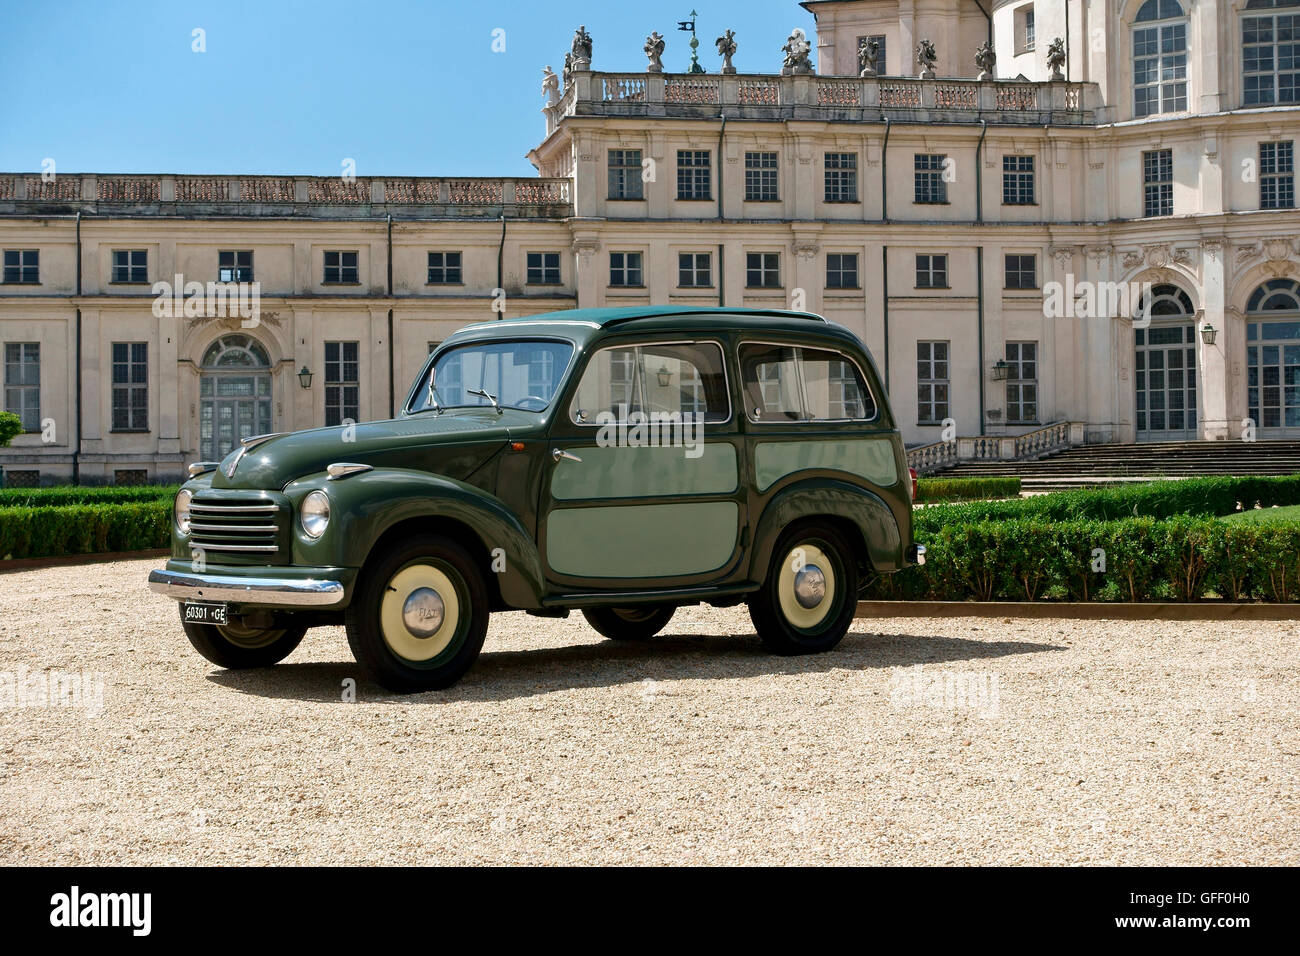 Fiat topolino giardinetta Auto ausgestellt im Stupinigi Jagdschloss. Residenzen des Königlichen Hauses Savoyen. Stupinigi Provinz Turin, Italien Europa Stockfoto